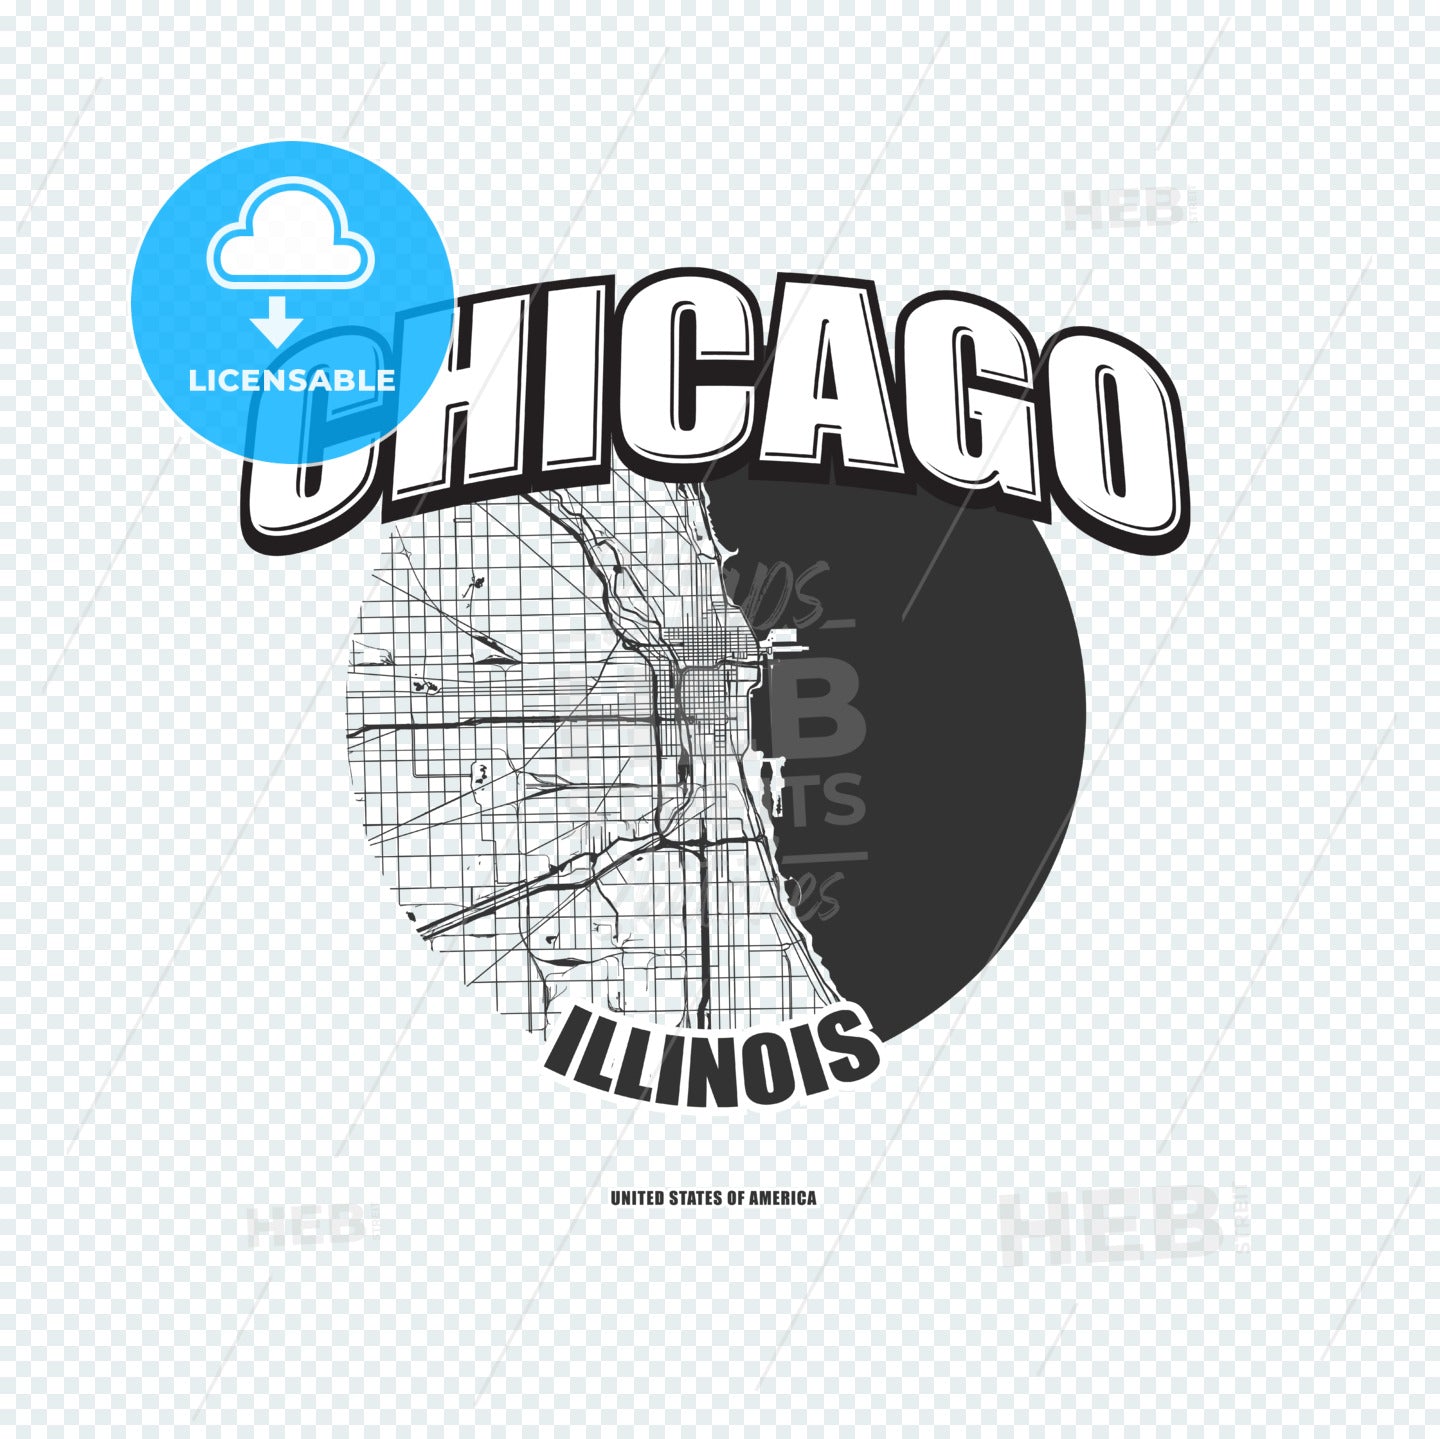 Chicago, Illinois, logo artwork – instant download